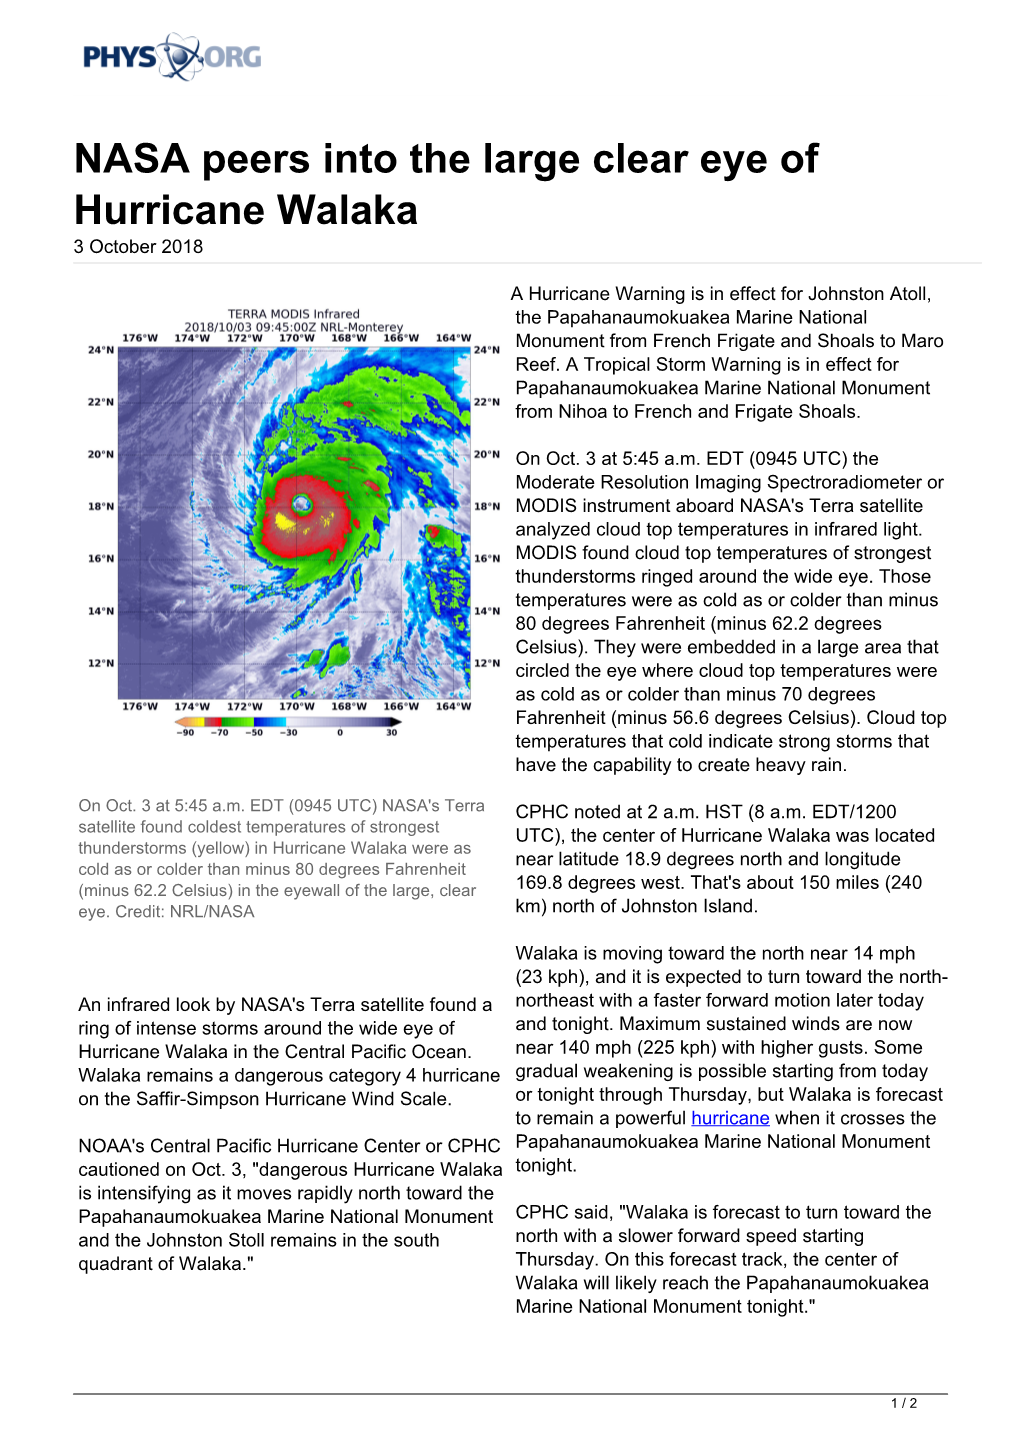 NASA Peers Into the Large Clear Eye of Hurricane Walaka 3 October 2018